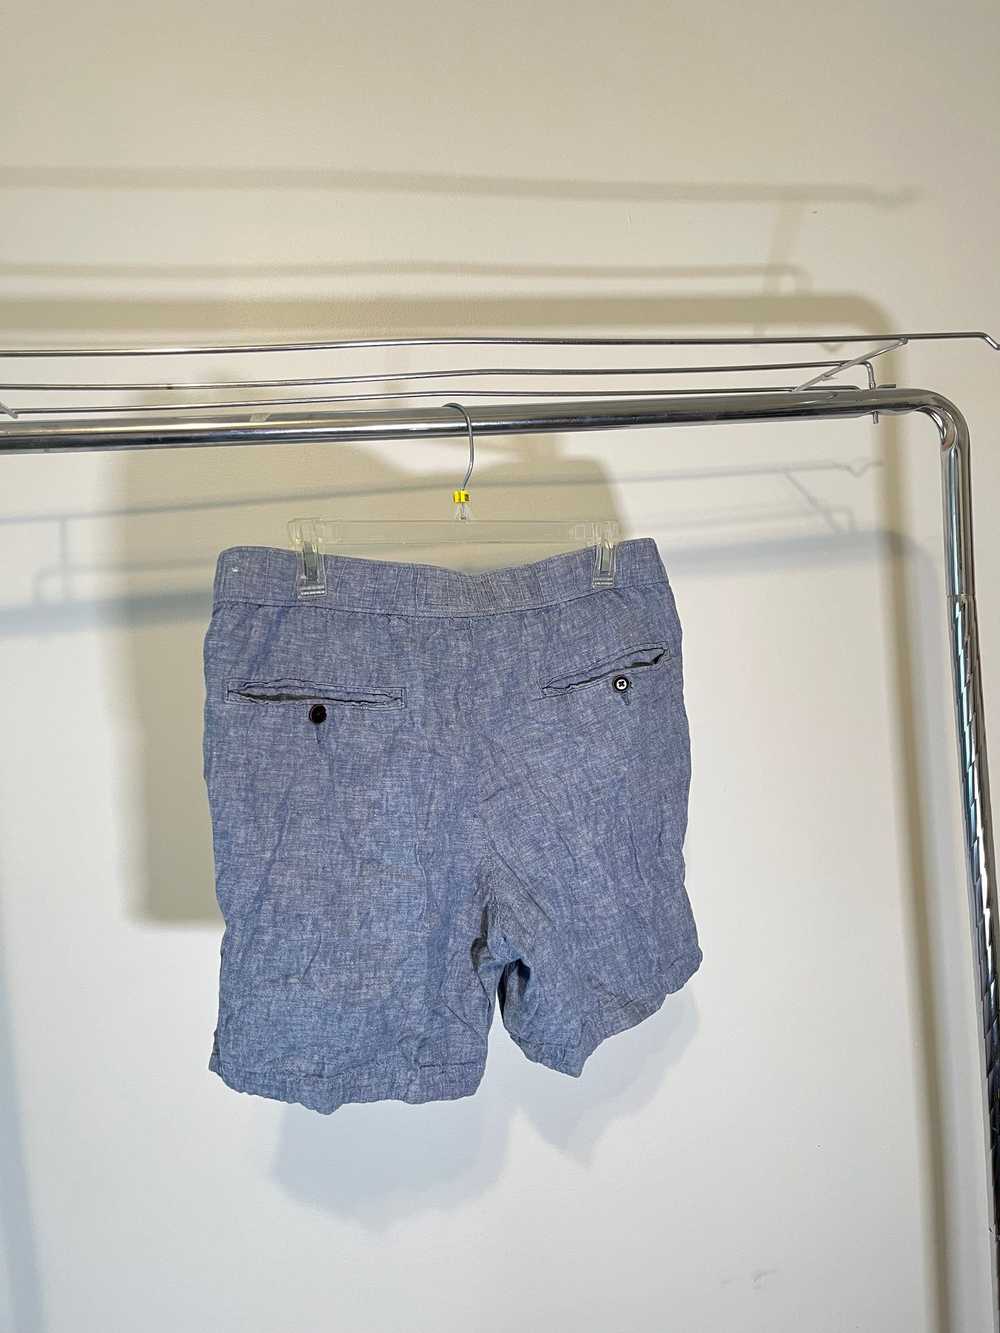 Abercrombie & Fitch Linen Blend Shorts - image 2